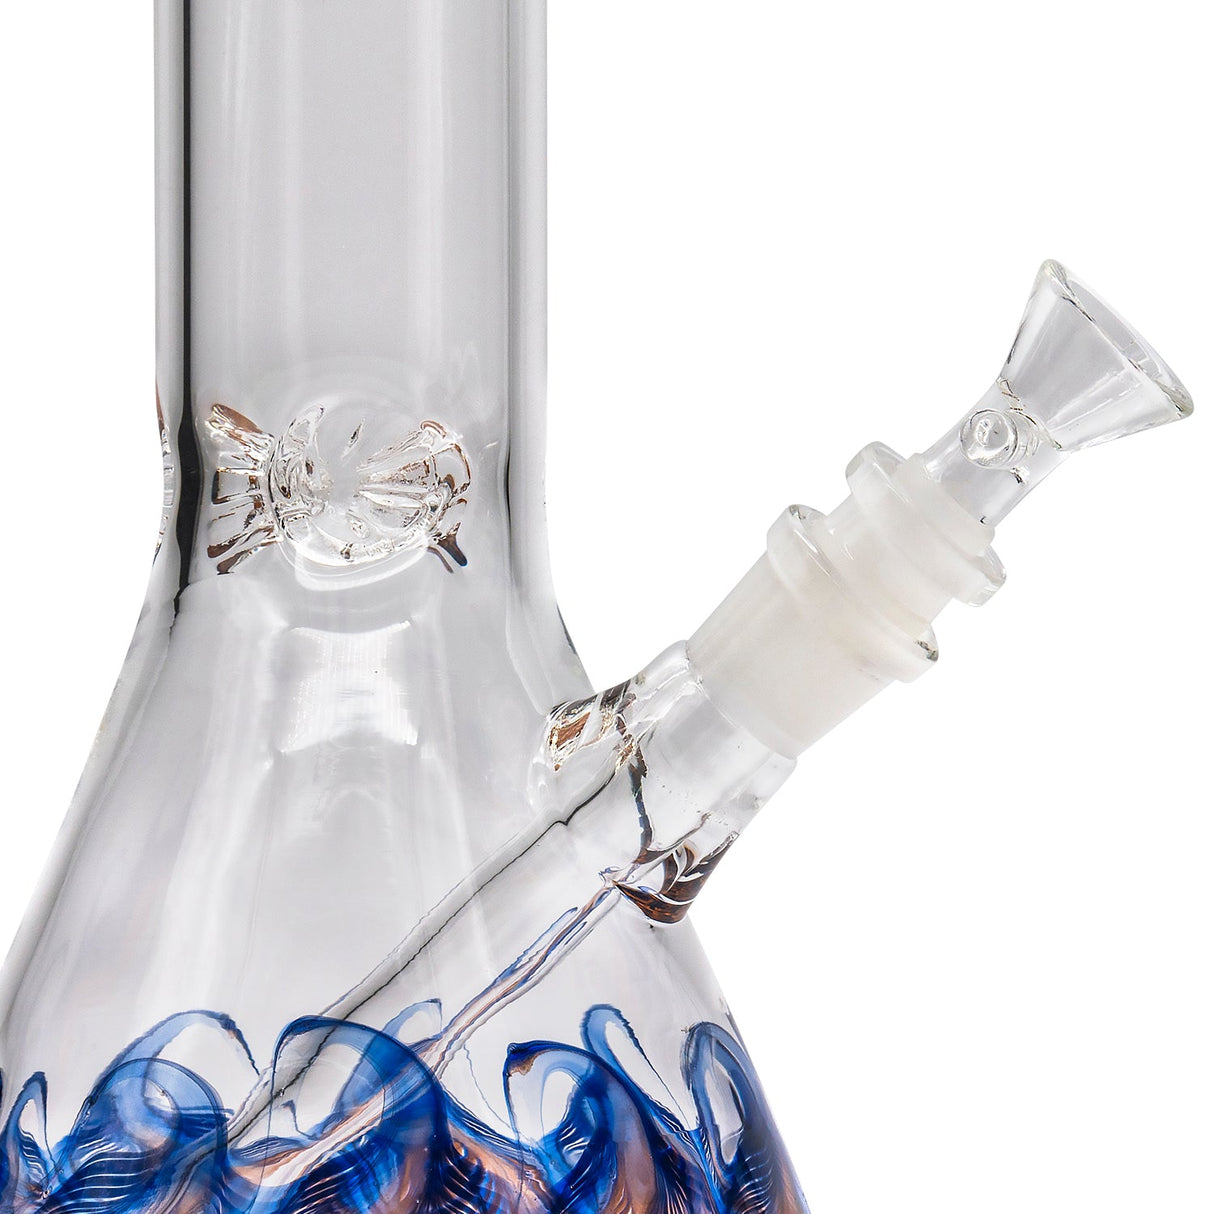 LA Pipes 'Phoenix Rising' Beaker Bong, 12-inch, Glass on Glass, USA Made